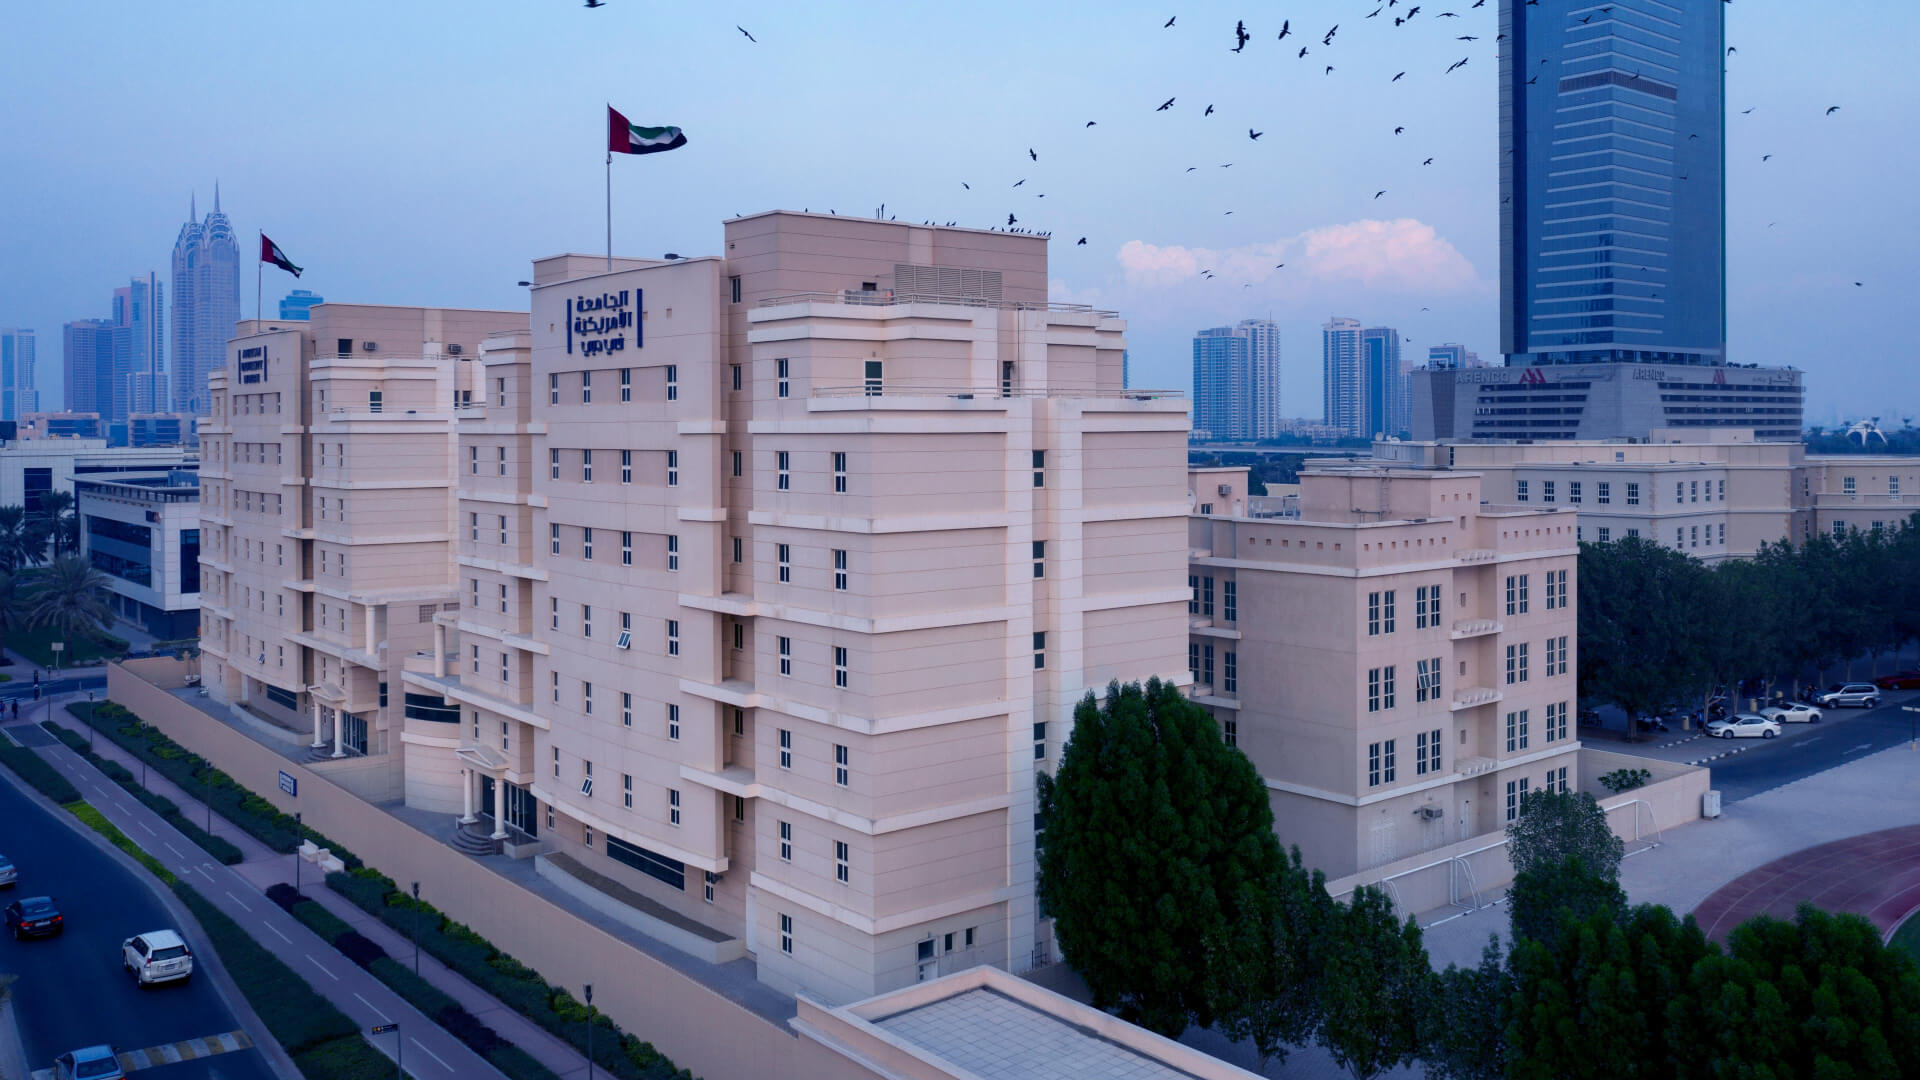 Accommodation - American University in Dubai